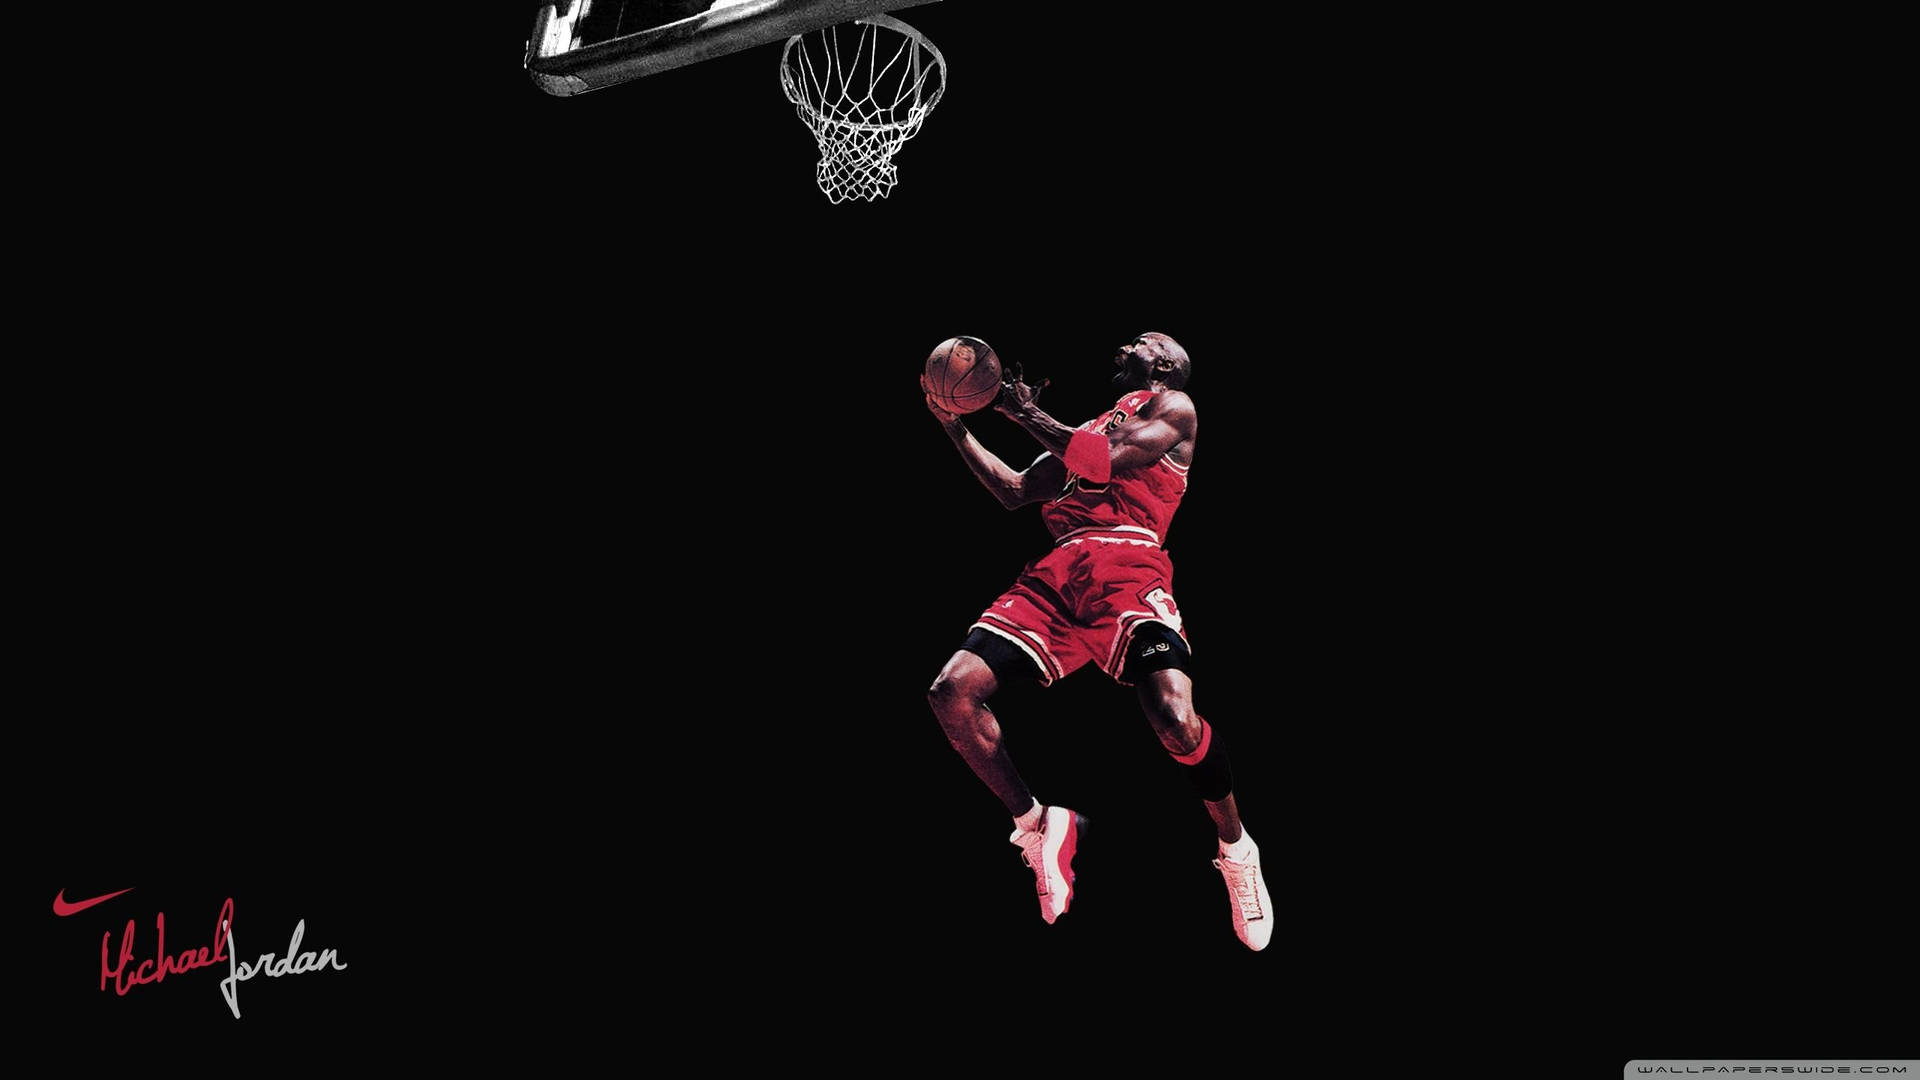 Poster Shows Michael Jordan Hd Background